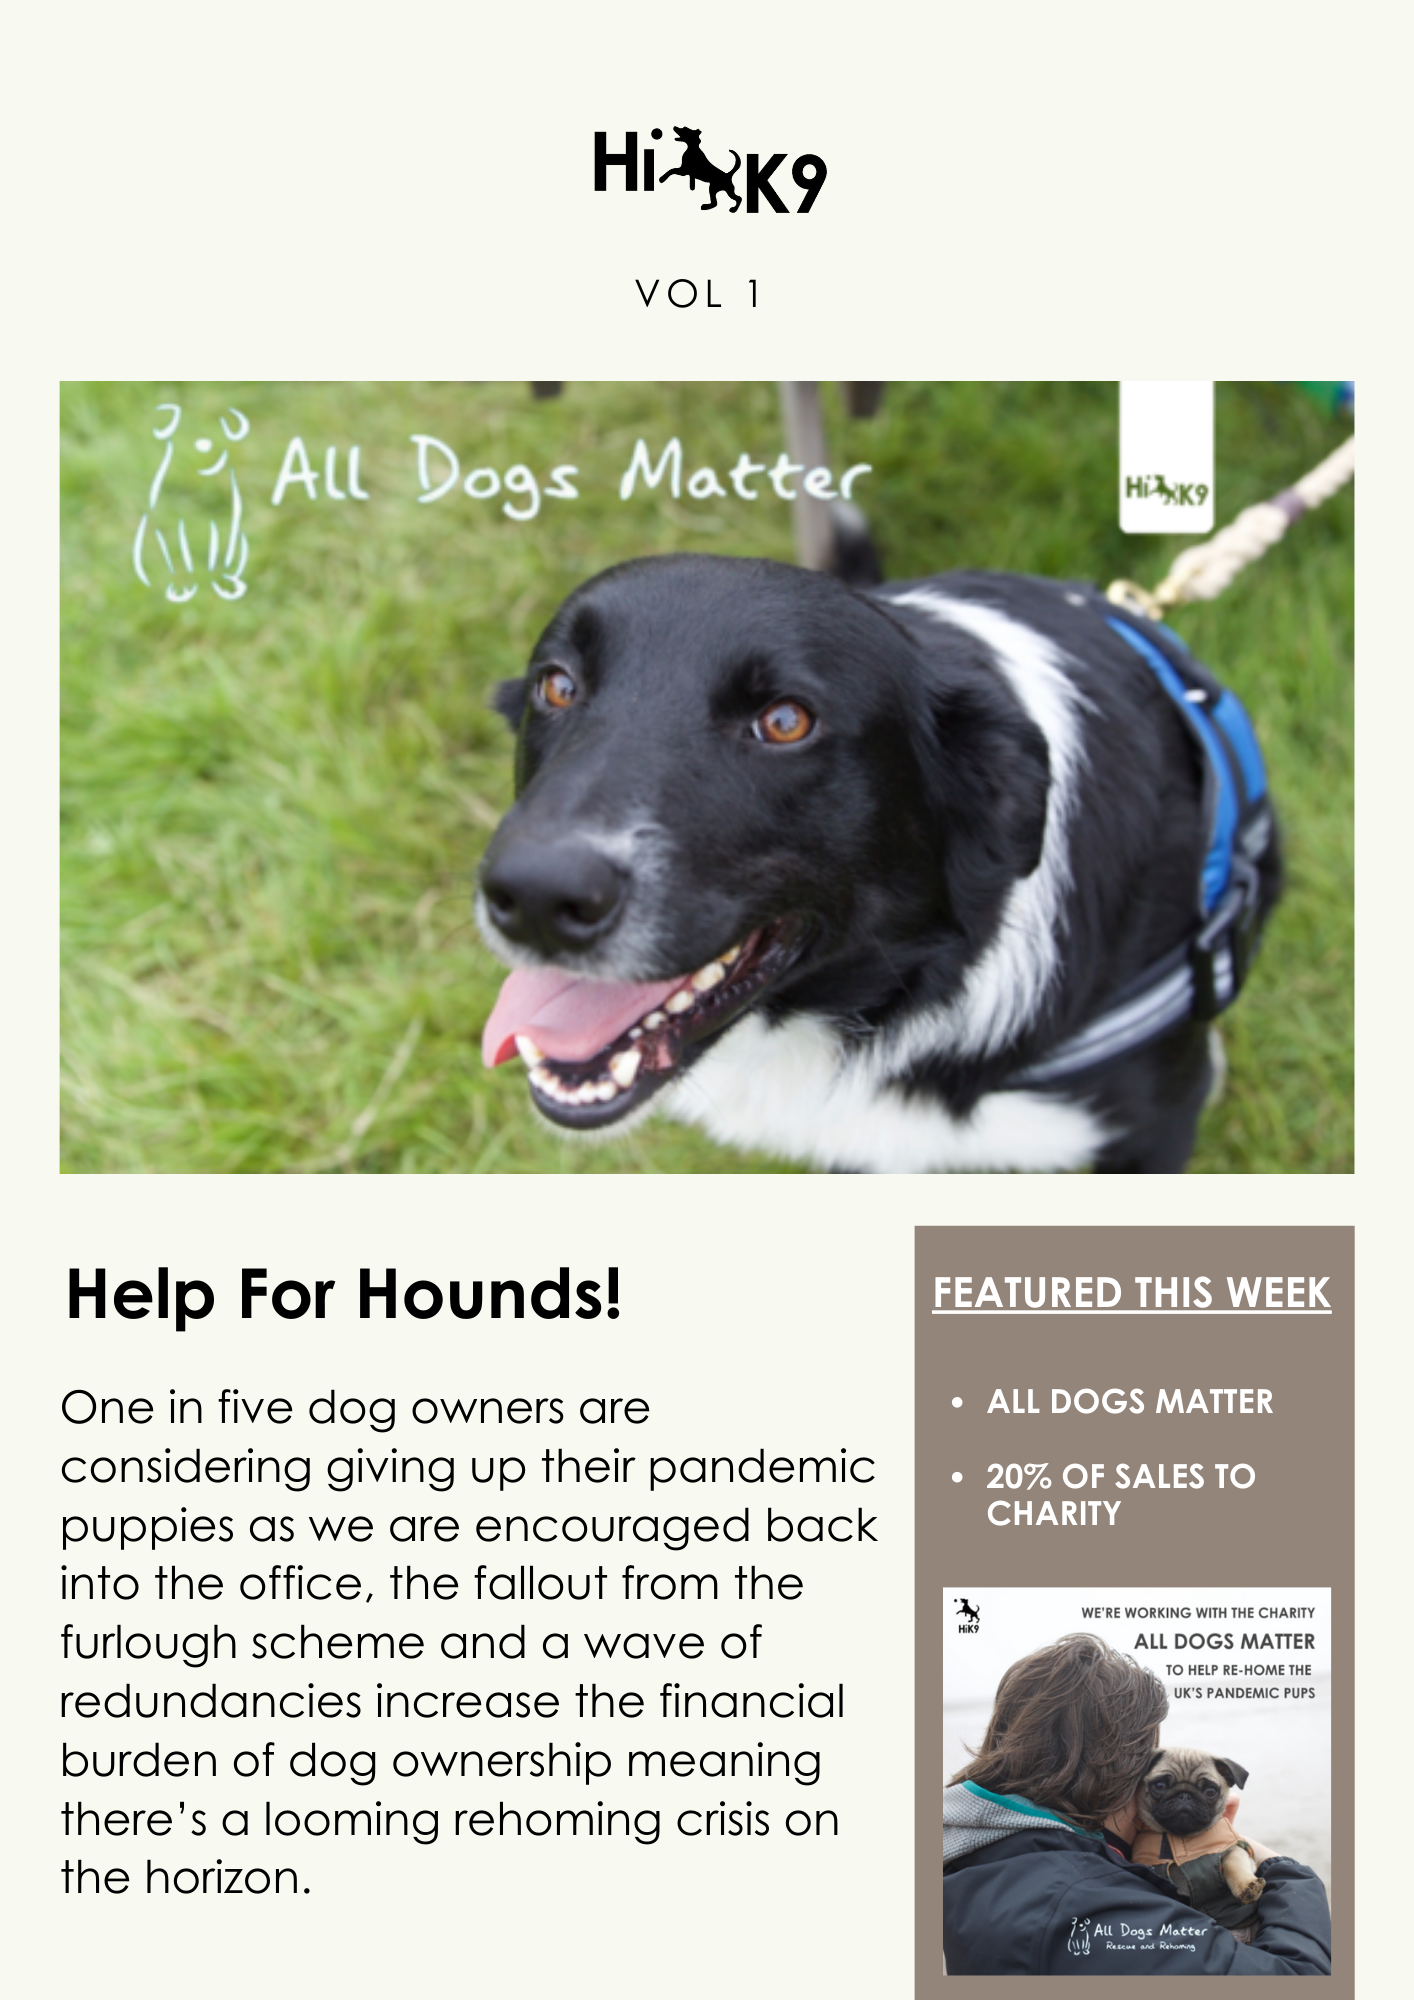 Hilfe für Hunde hik9 Charity